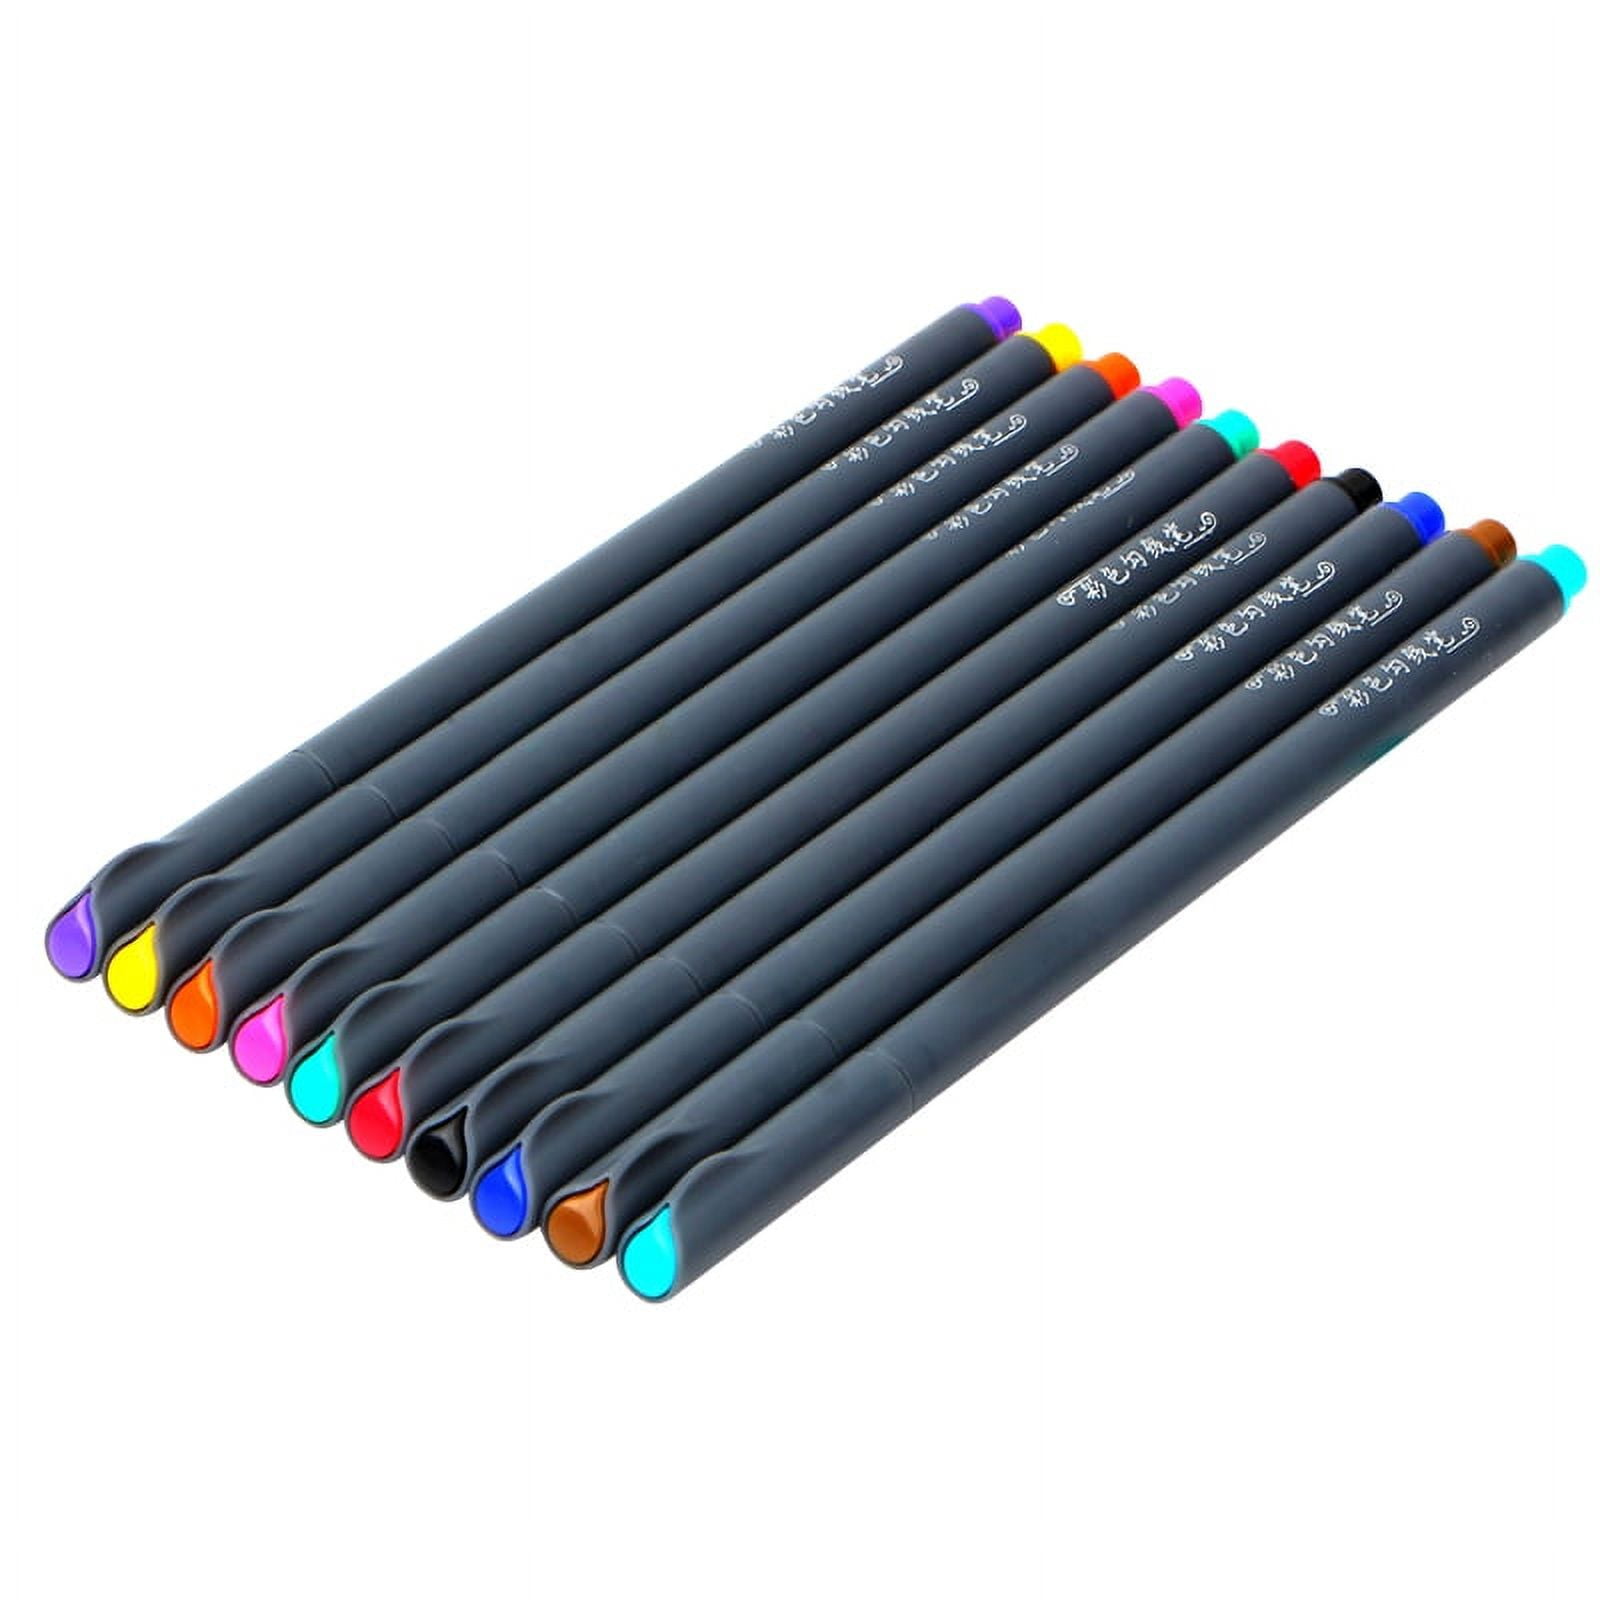 MyLifeUNIT: Fineliner Color Pen Set, 20 Pieces Colored Fine Liner Sketch  Drawing Pens, 10 Assorted Colors